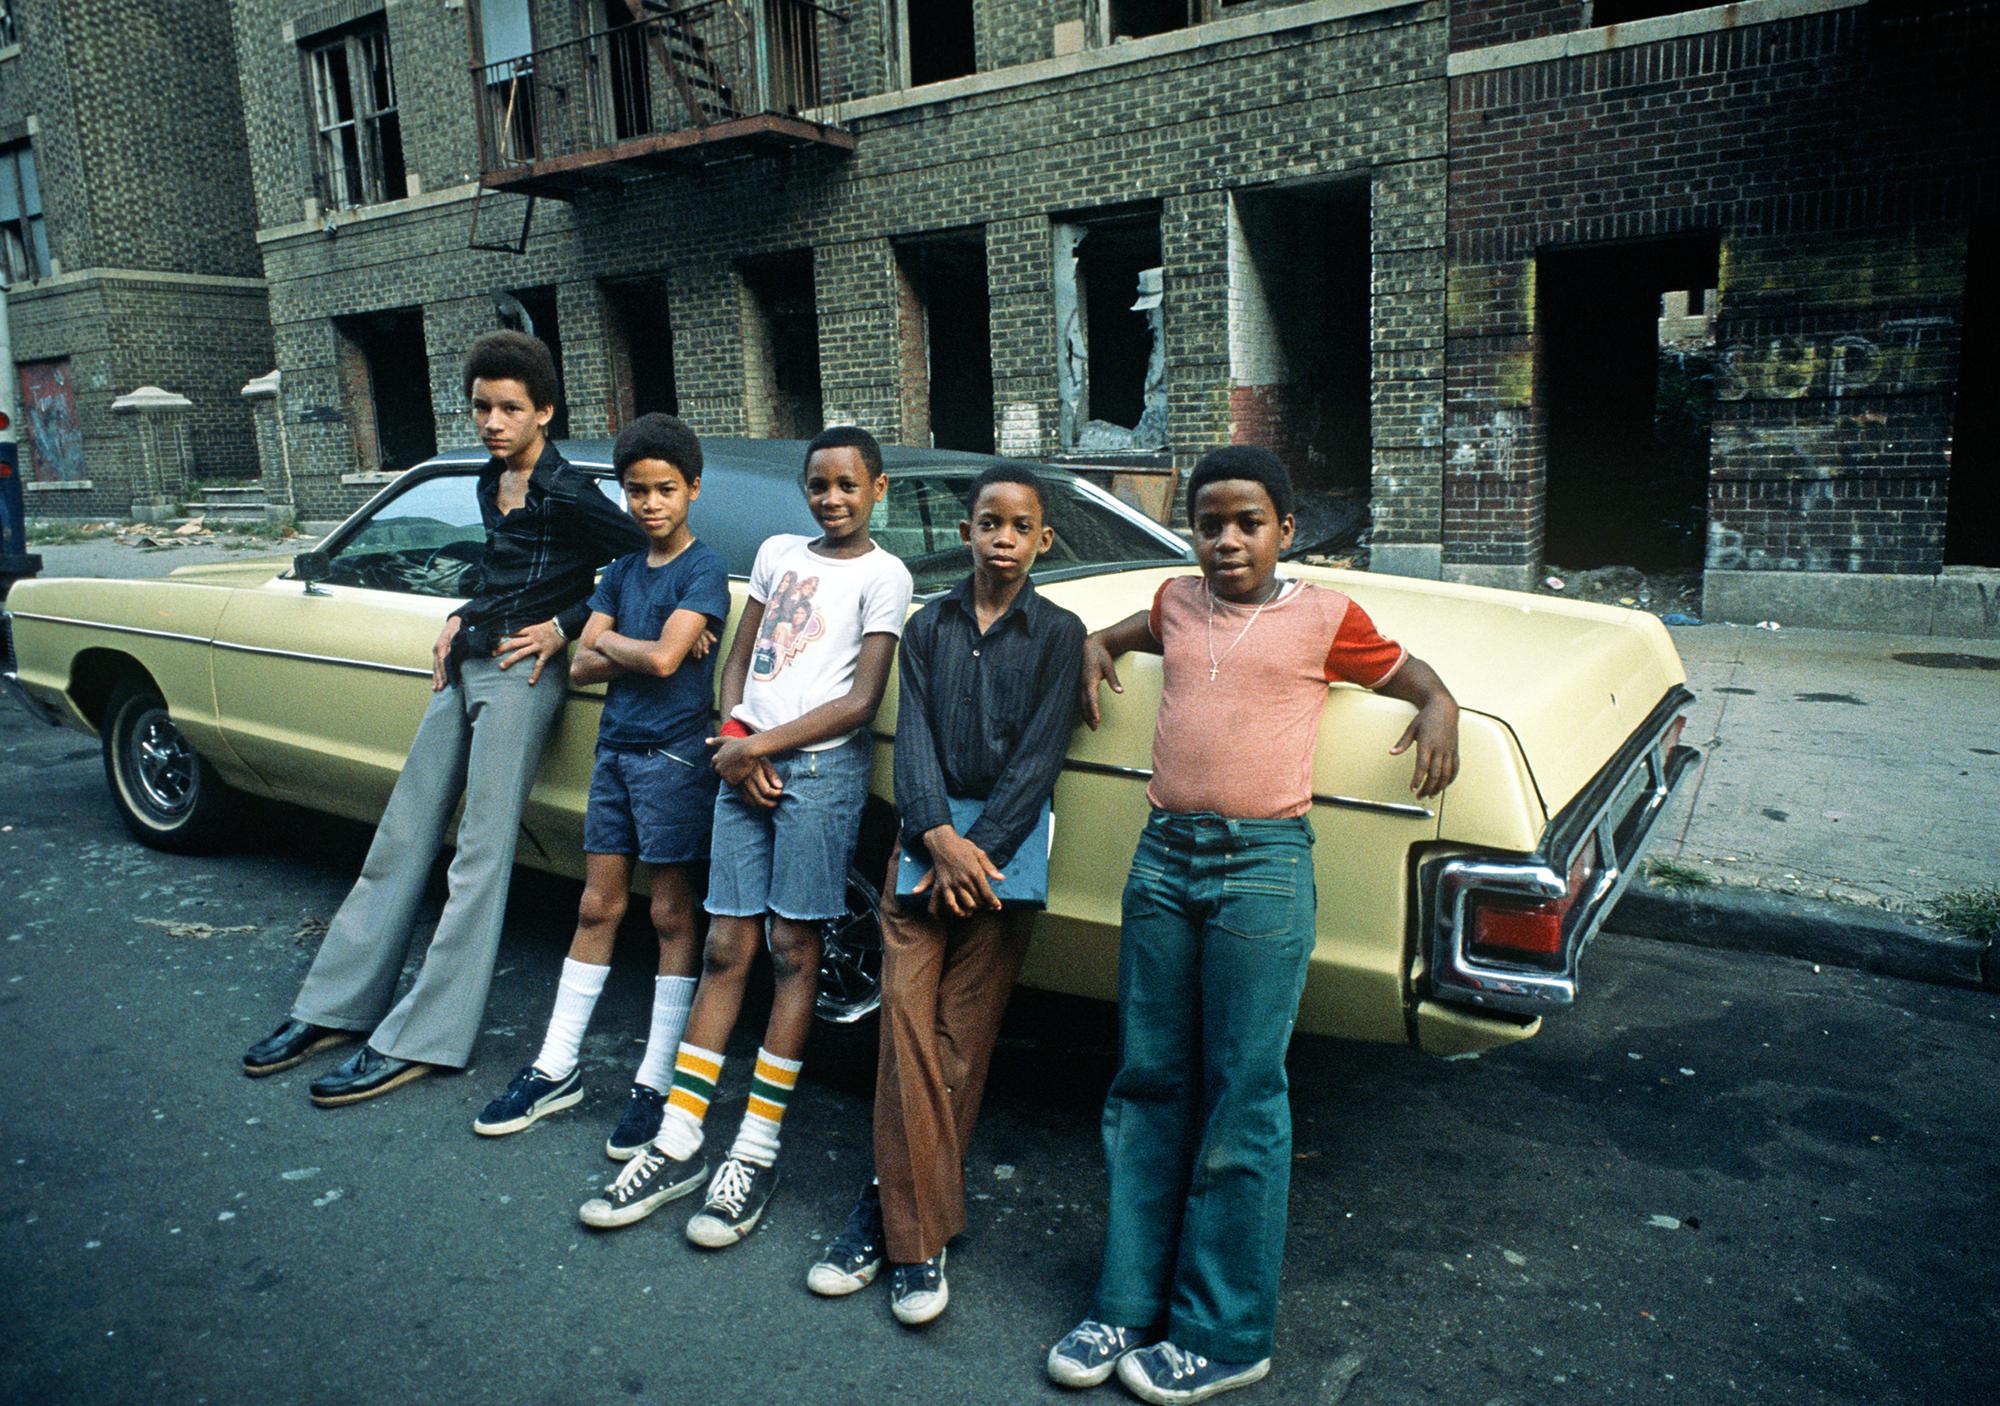 Alain Le Garsmeur Color Photograph - Bronx Teenagers Oversize Limited Edition C type 